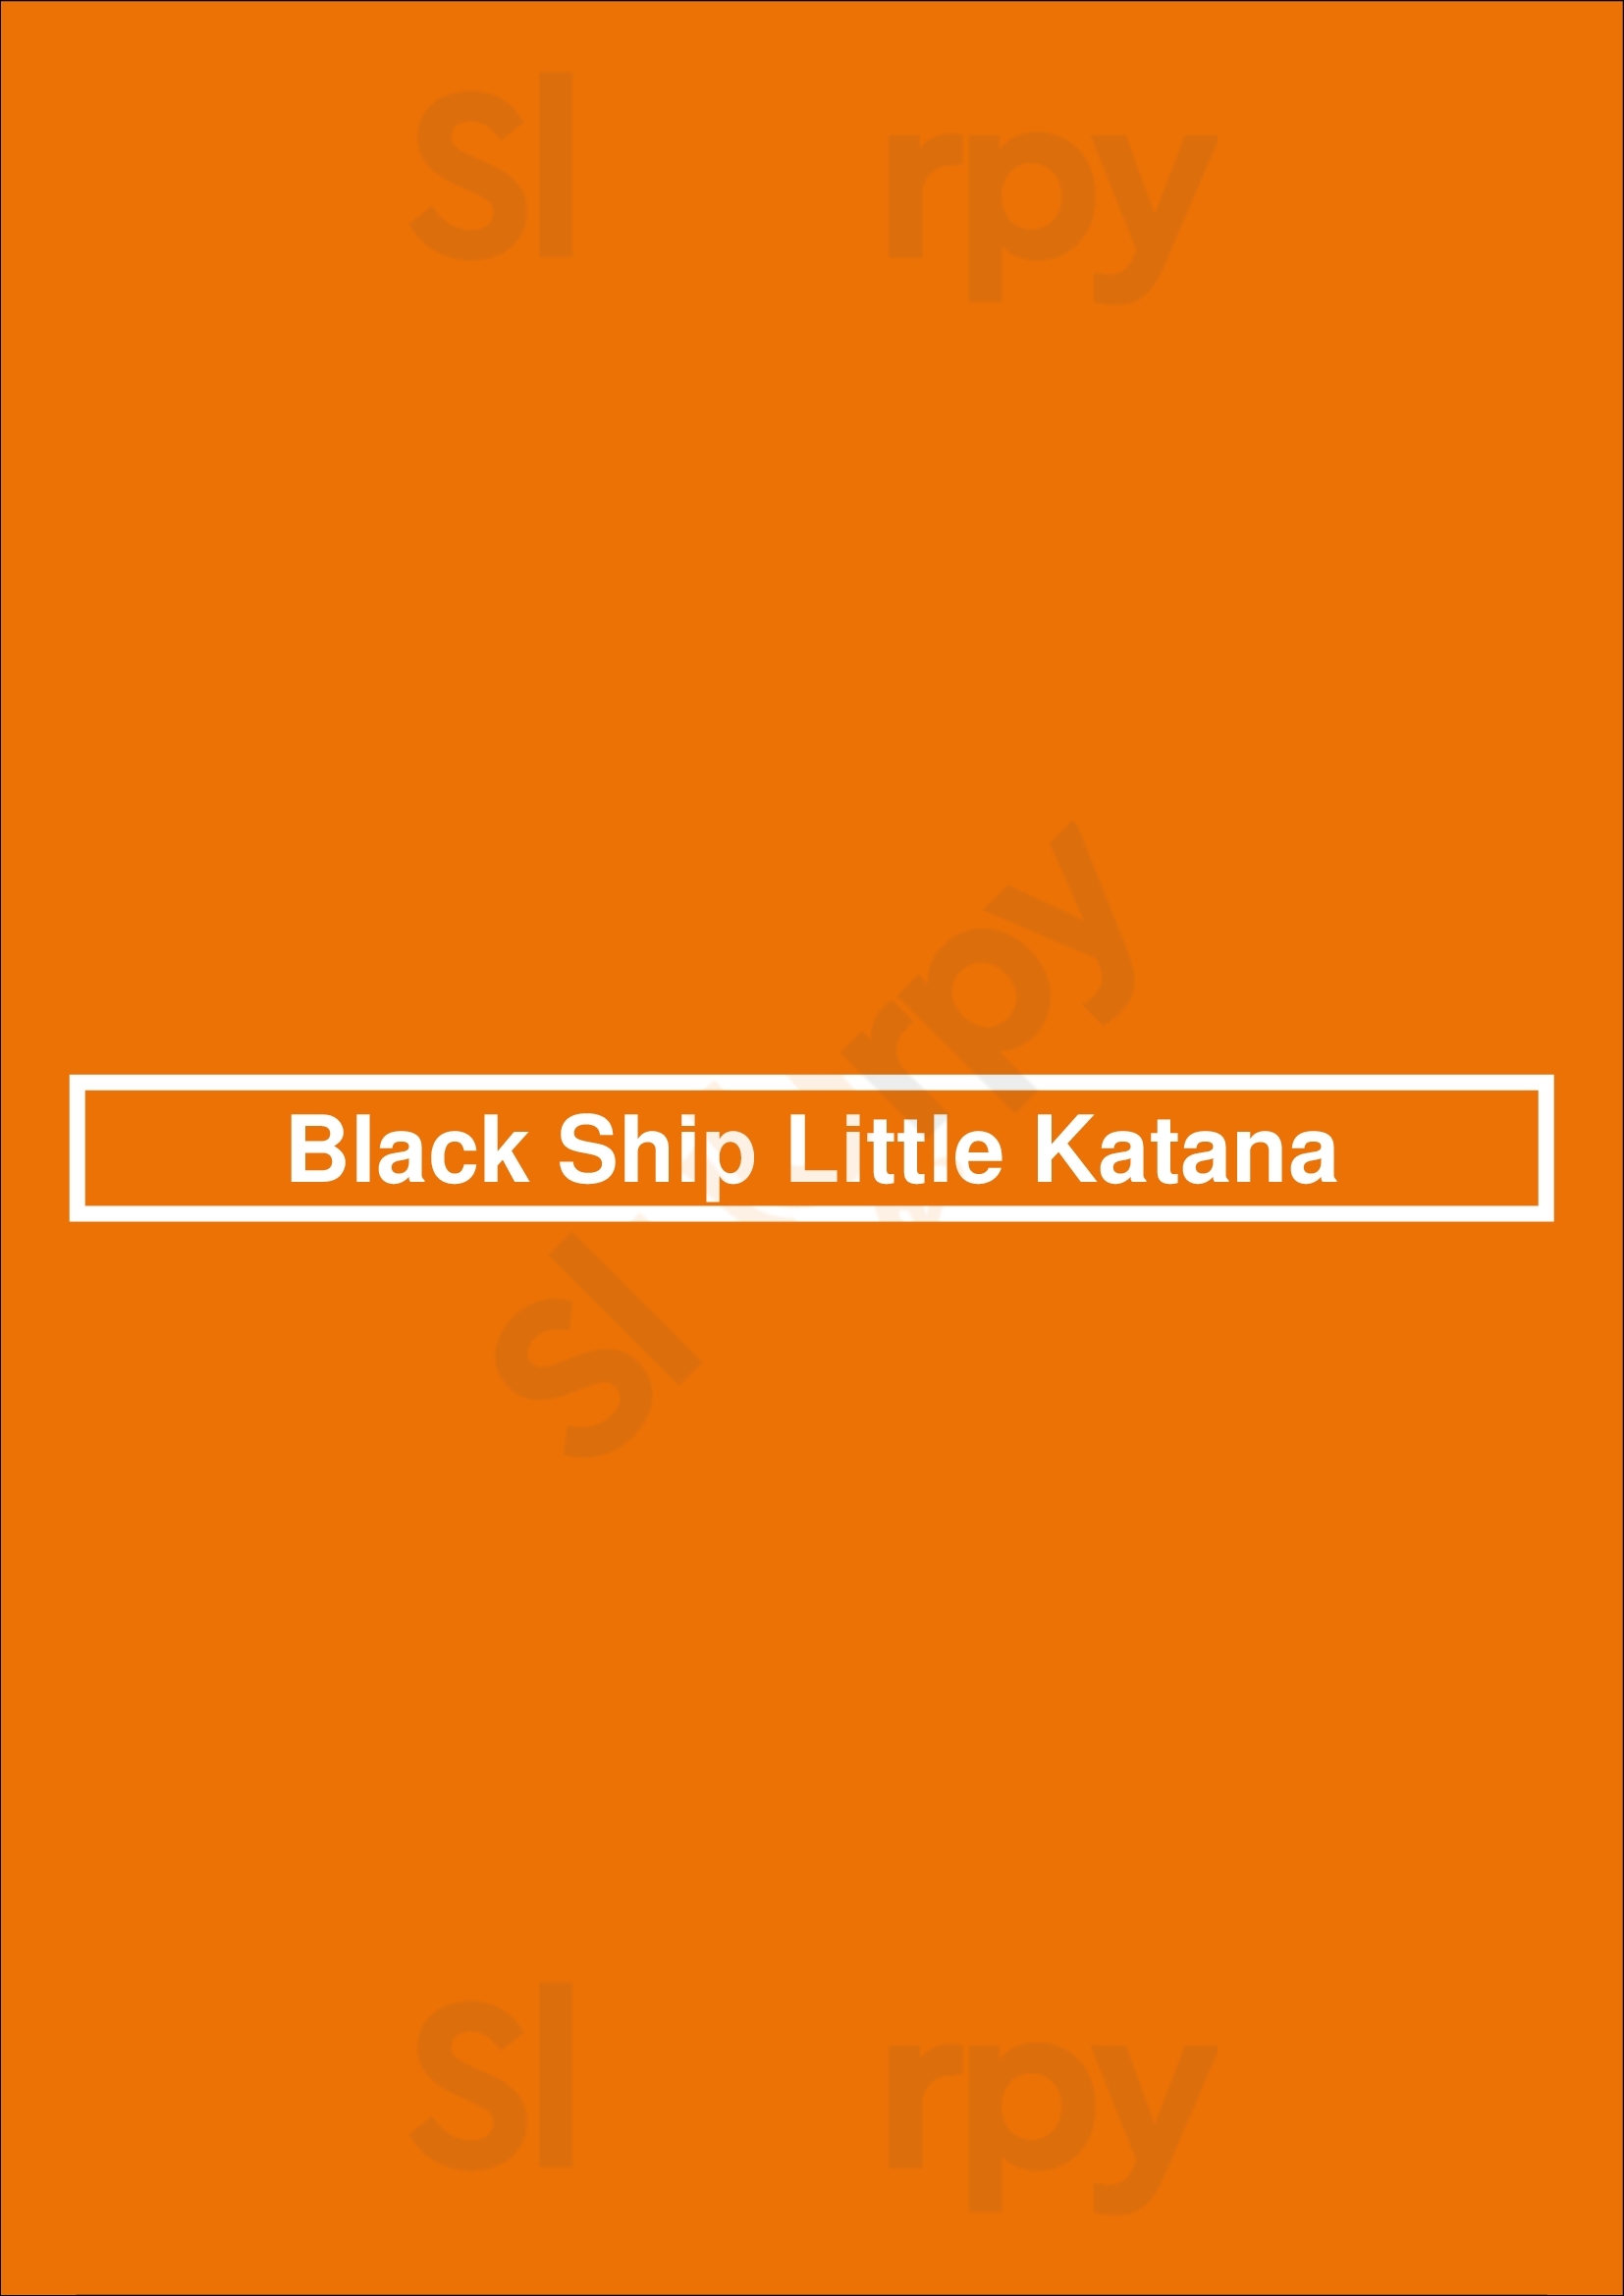 Black Ship Little Katana Dallas Menu - 1